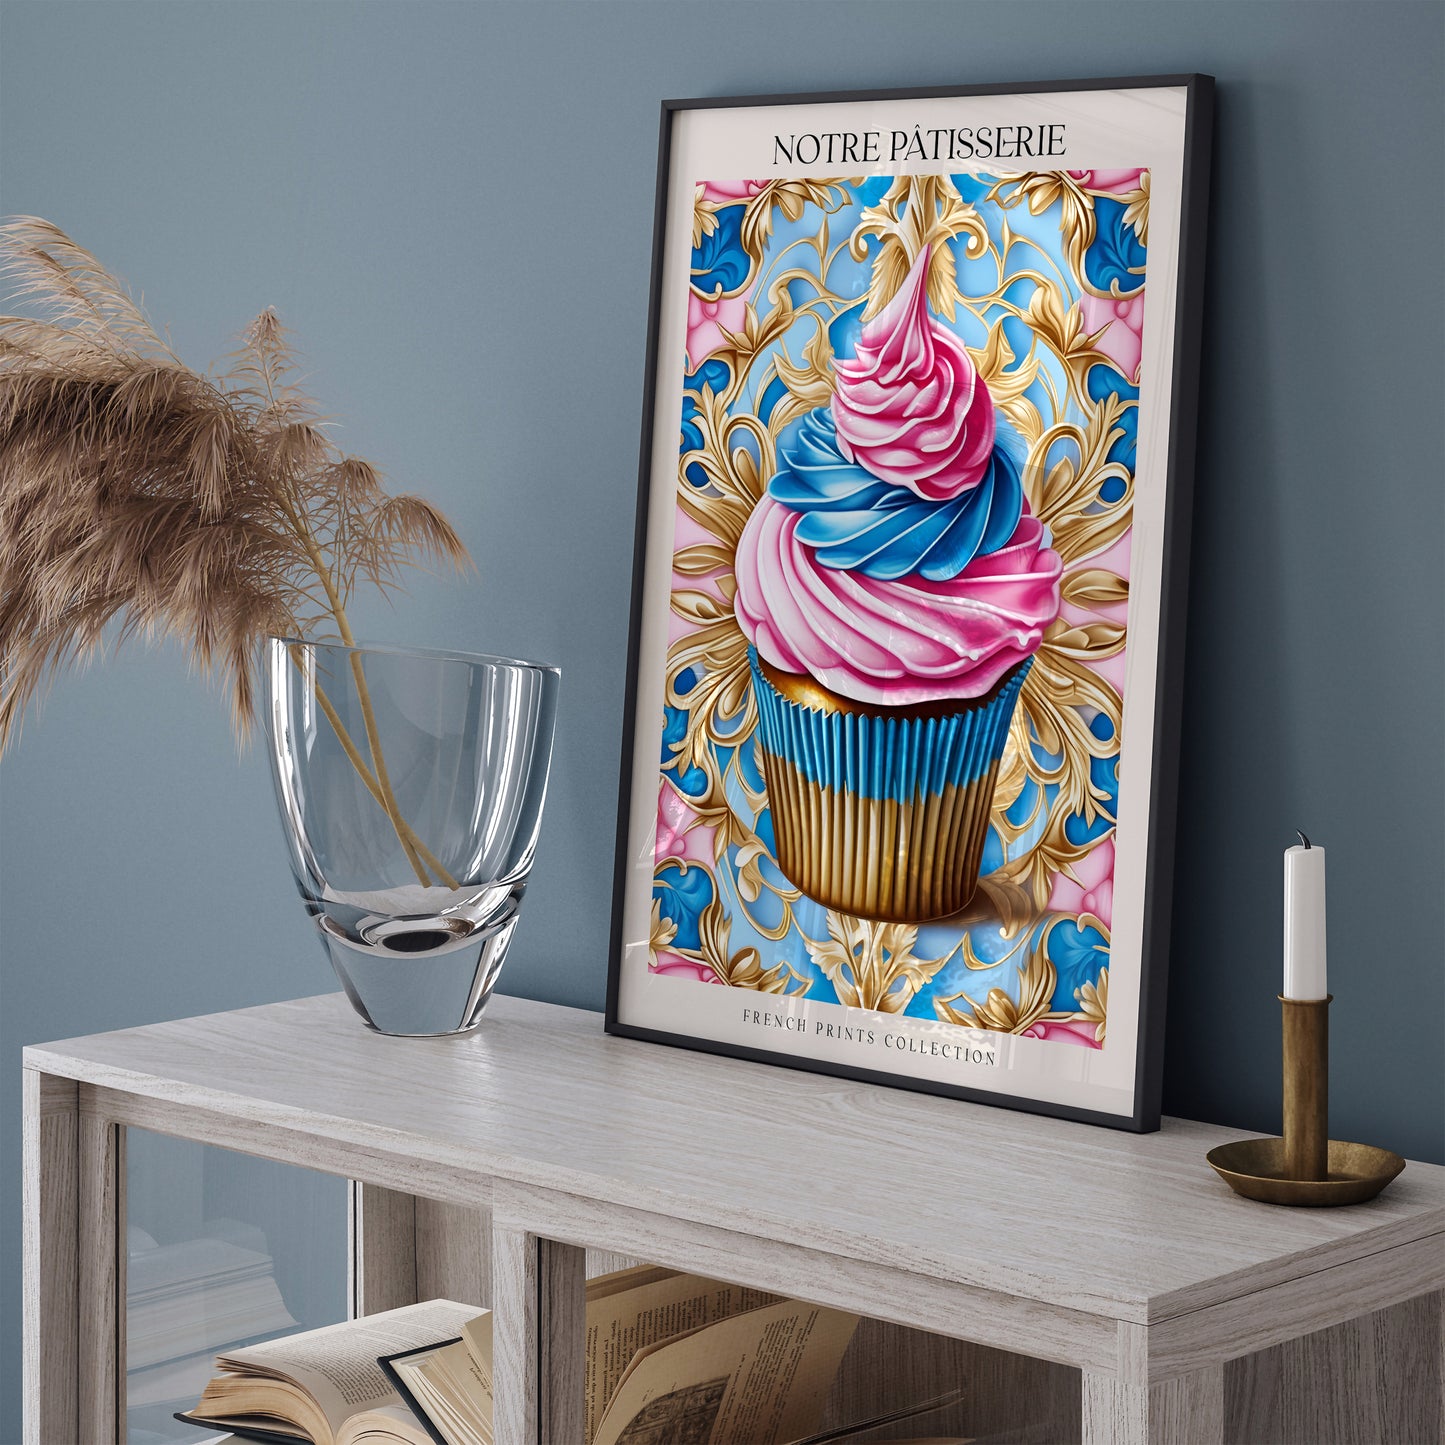 Charming Confections Poster: Dessert Art Prints